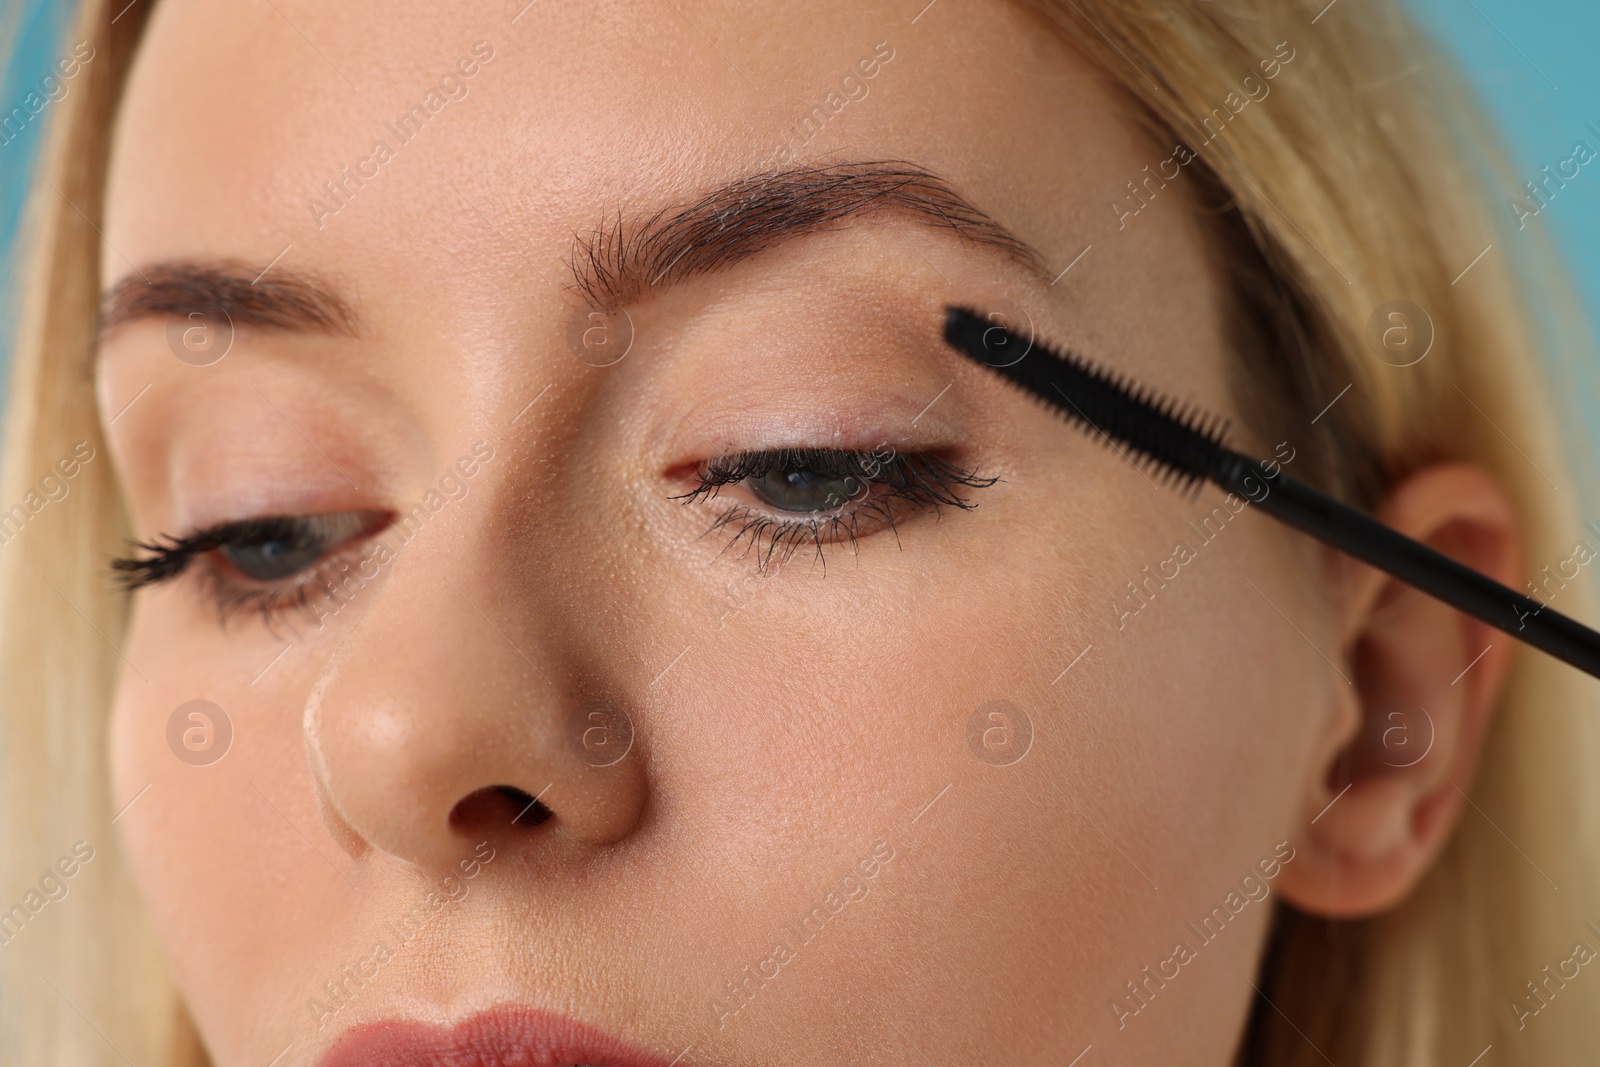 Photo of Beautiful woman applying mascara on light blue background, closeup